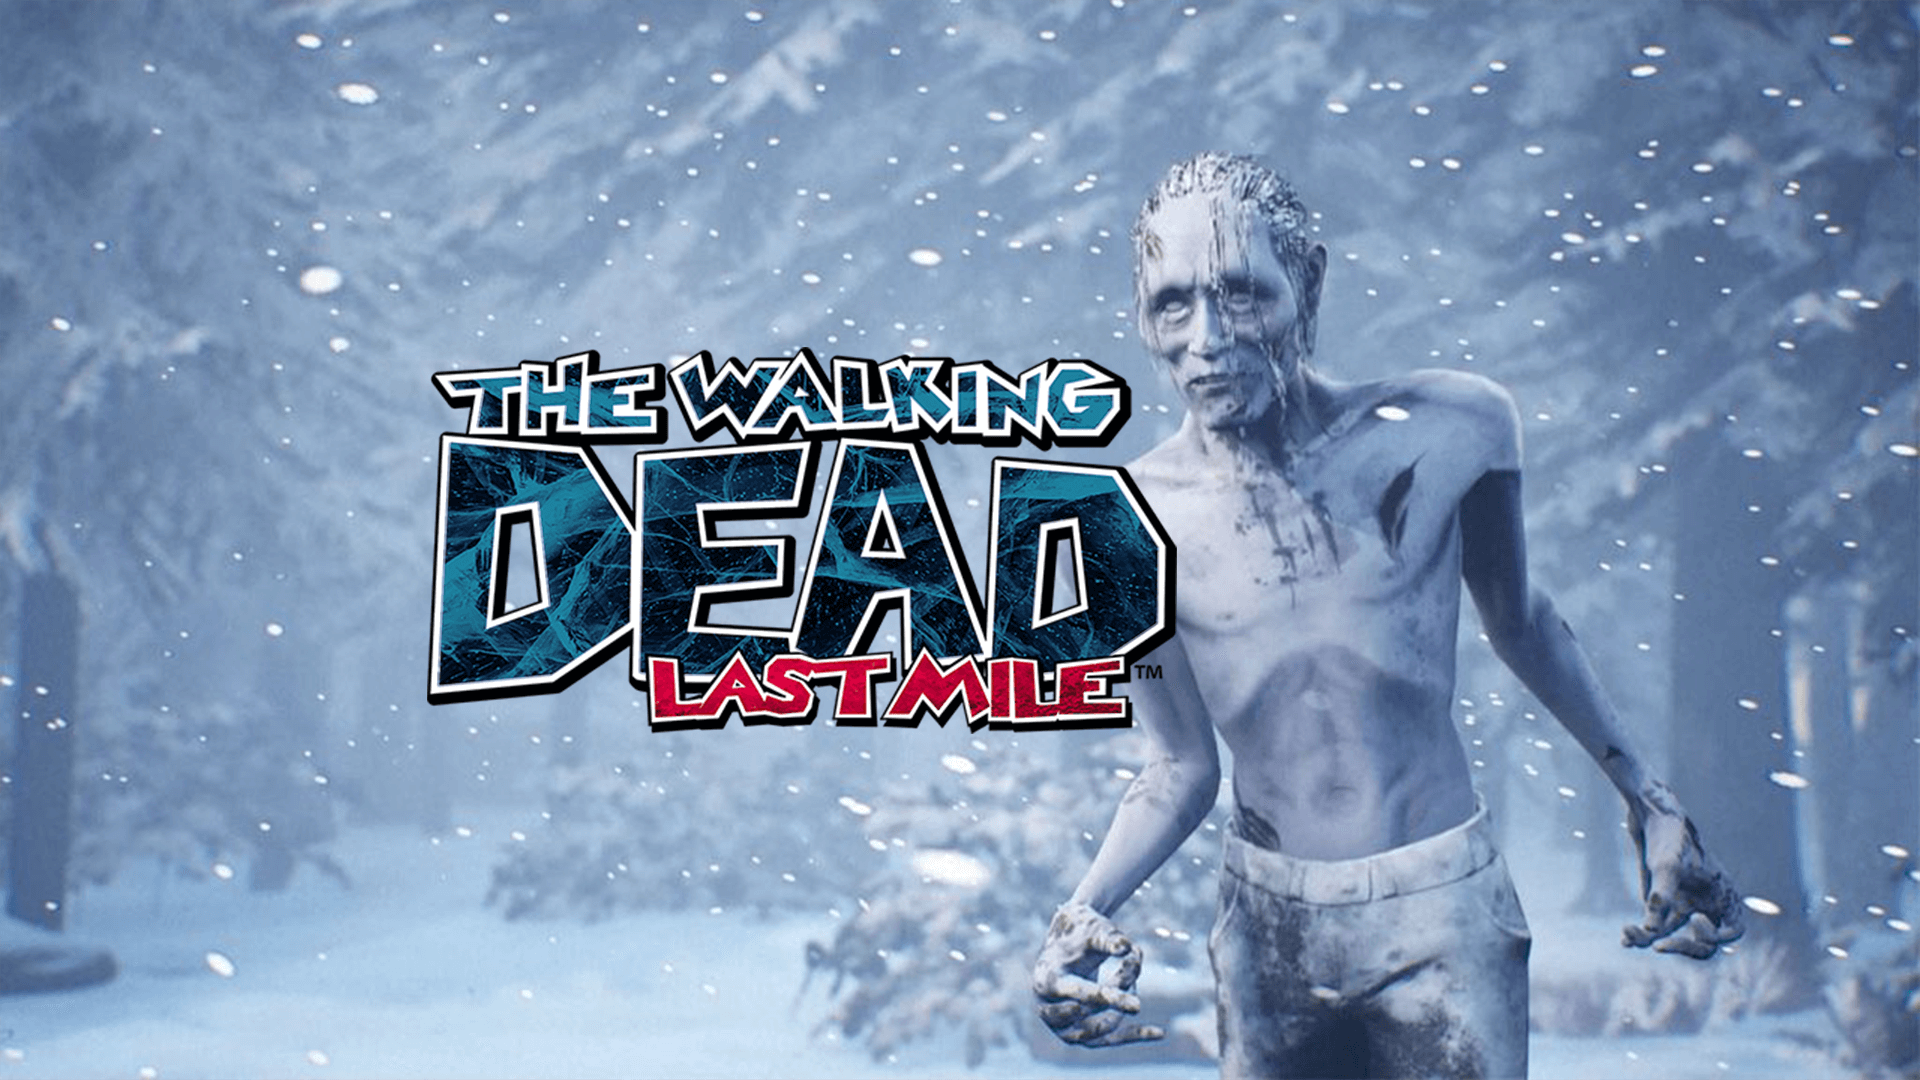 The Walking Dead: Last Mile is live!